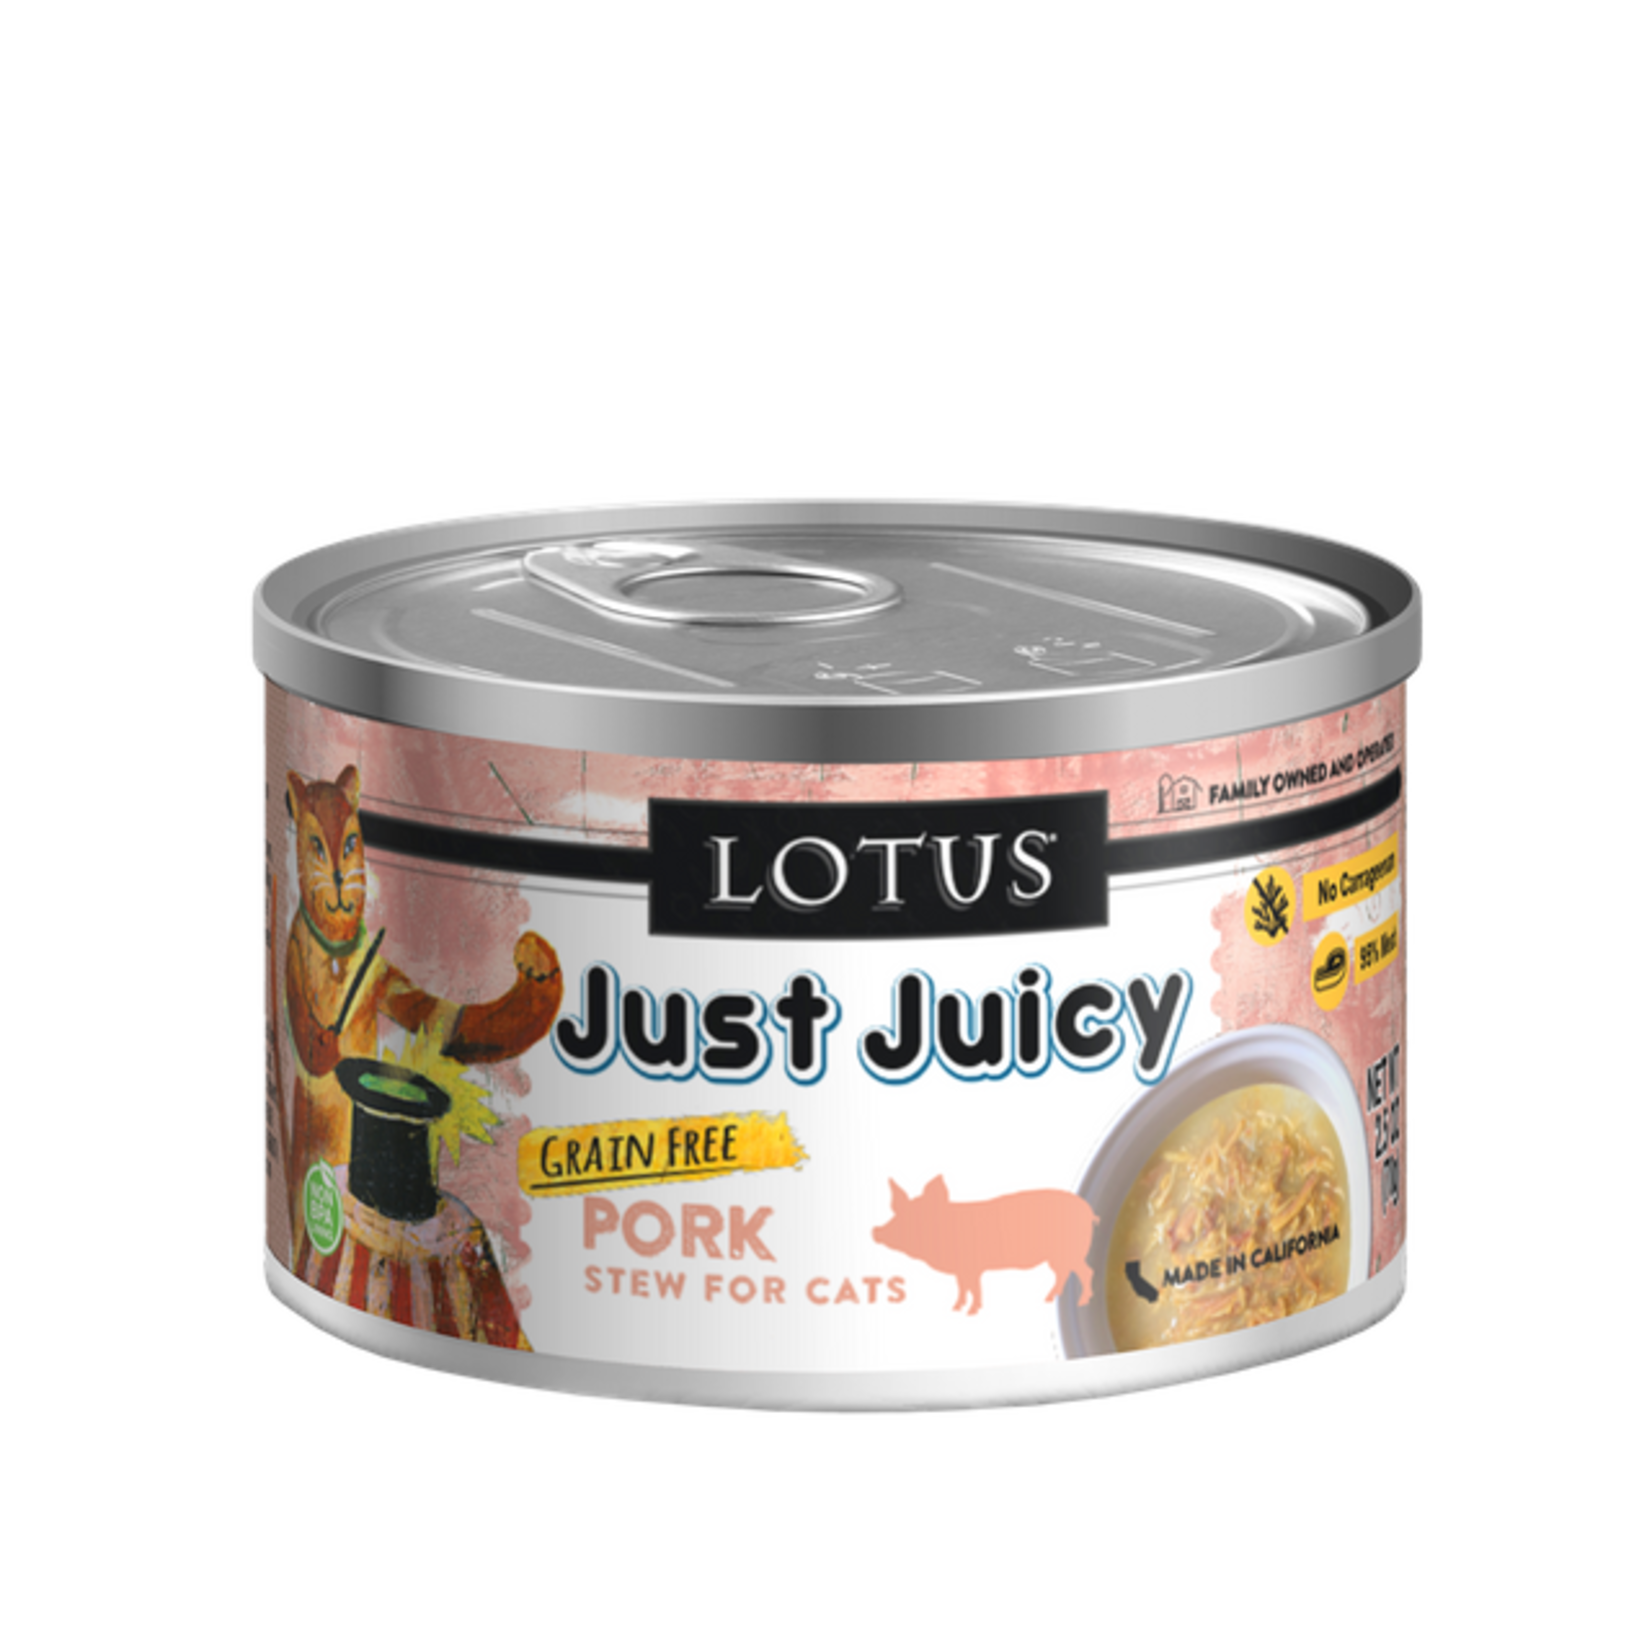 Lotus Wet Cat Food Just Juicy Pork Stew for Cats 2.5oz Grain Free